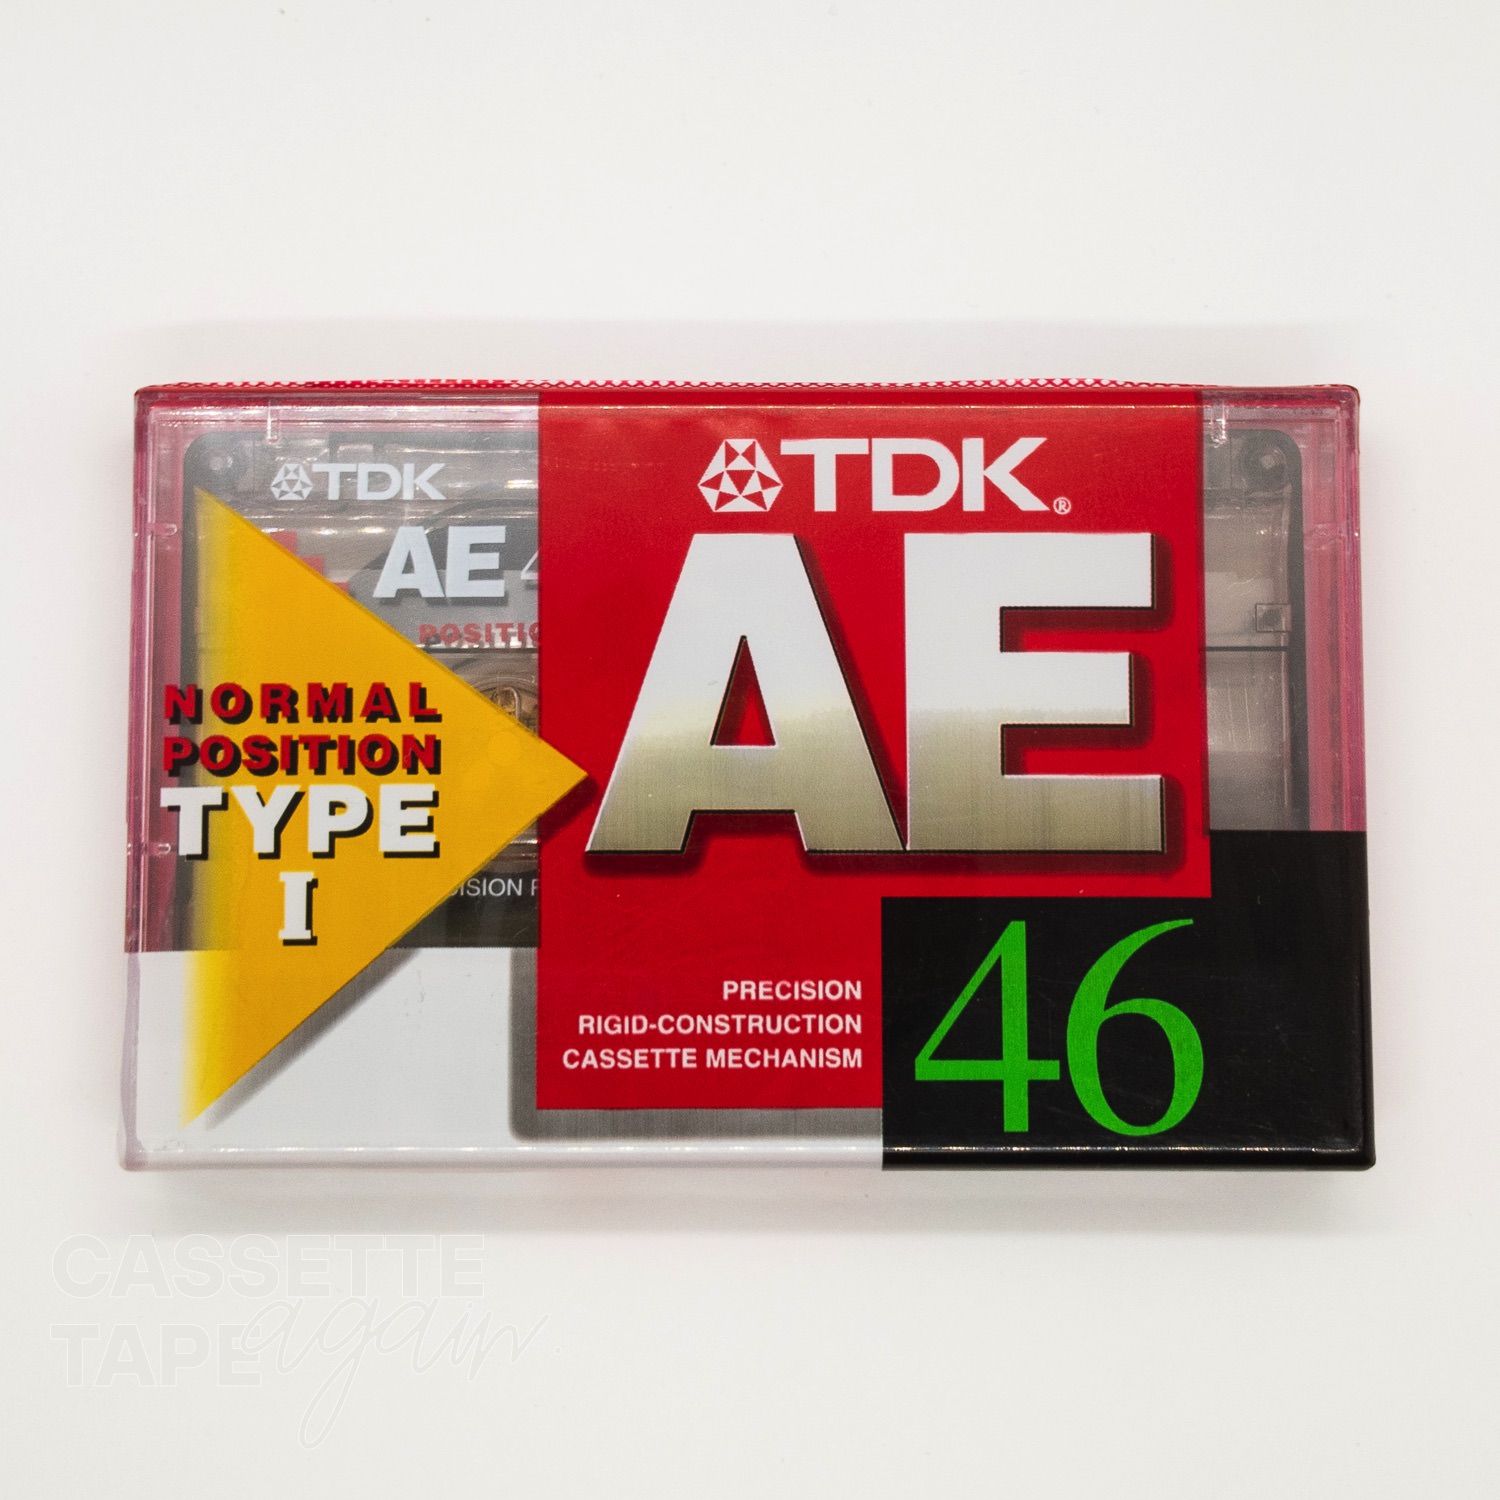 AE 46 / TDK(ノーマル)